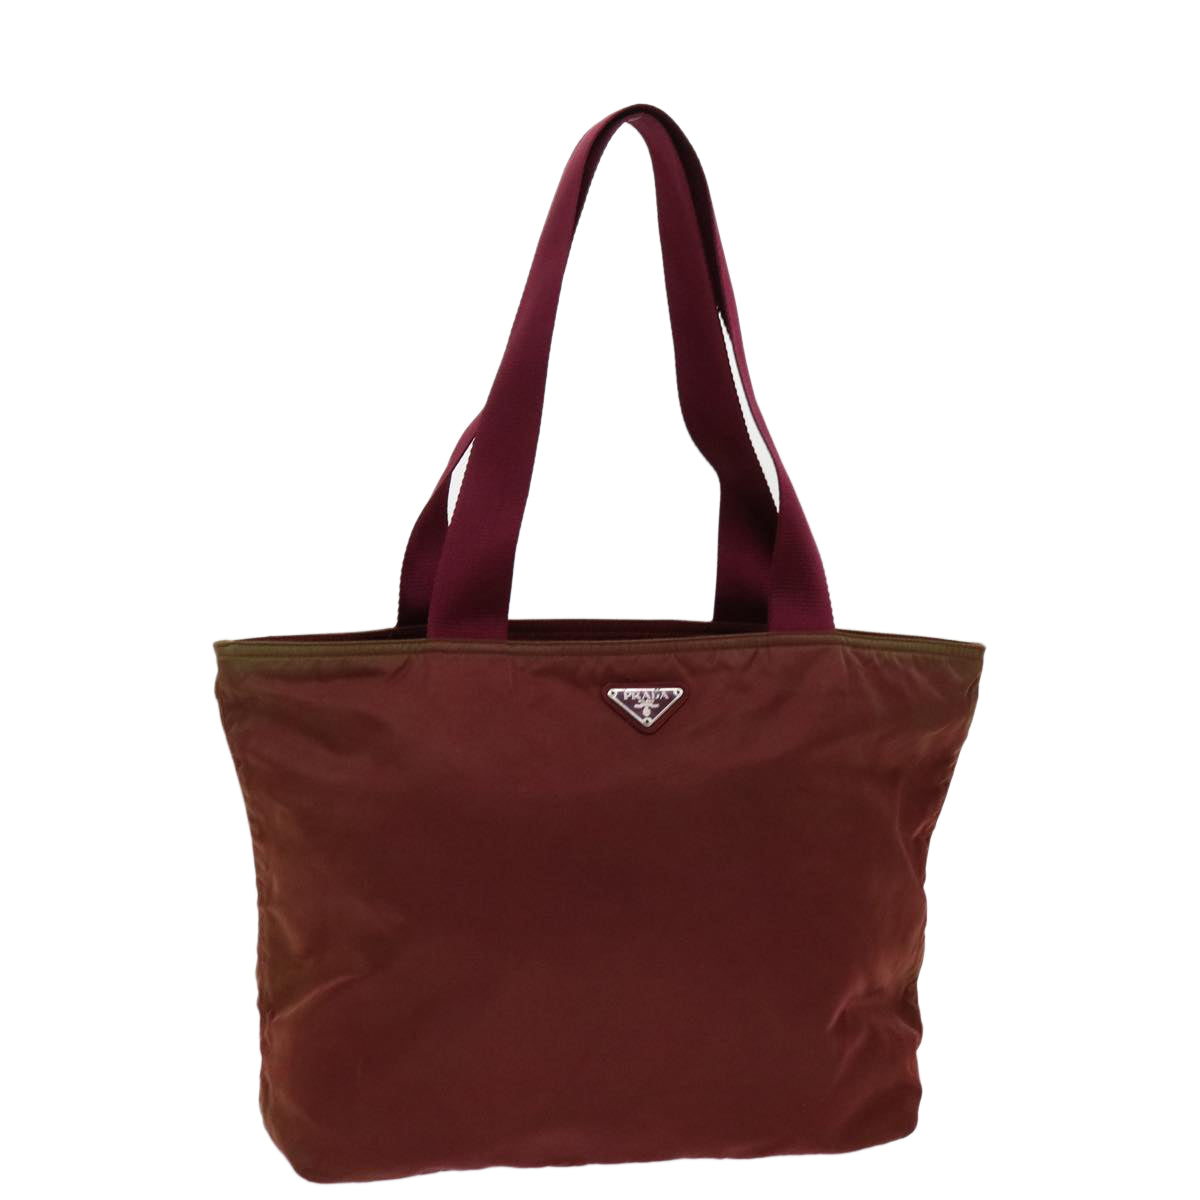 Prada Tessuto Burgundy Synthetic Tote Bag ()